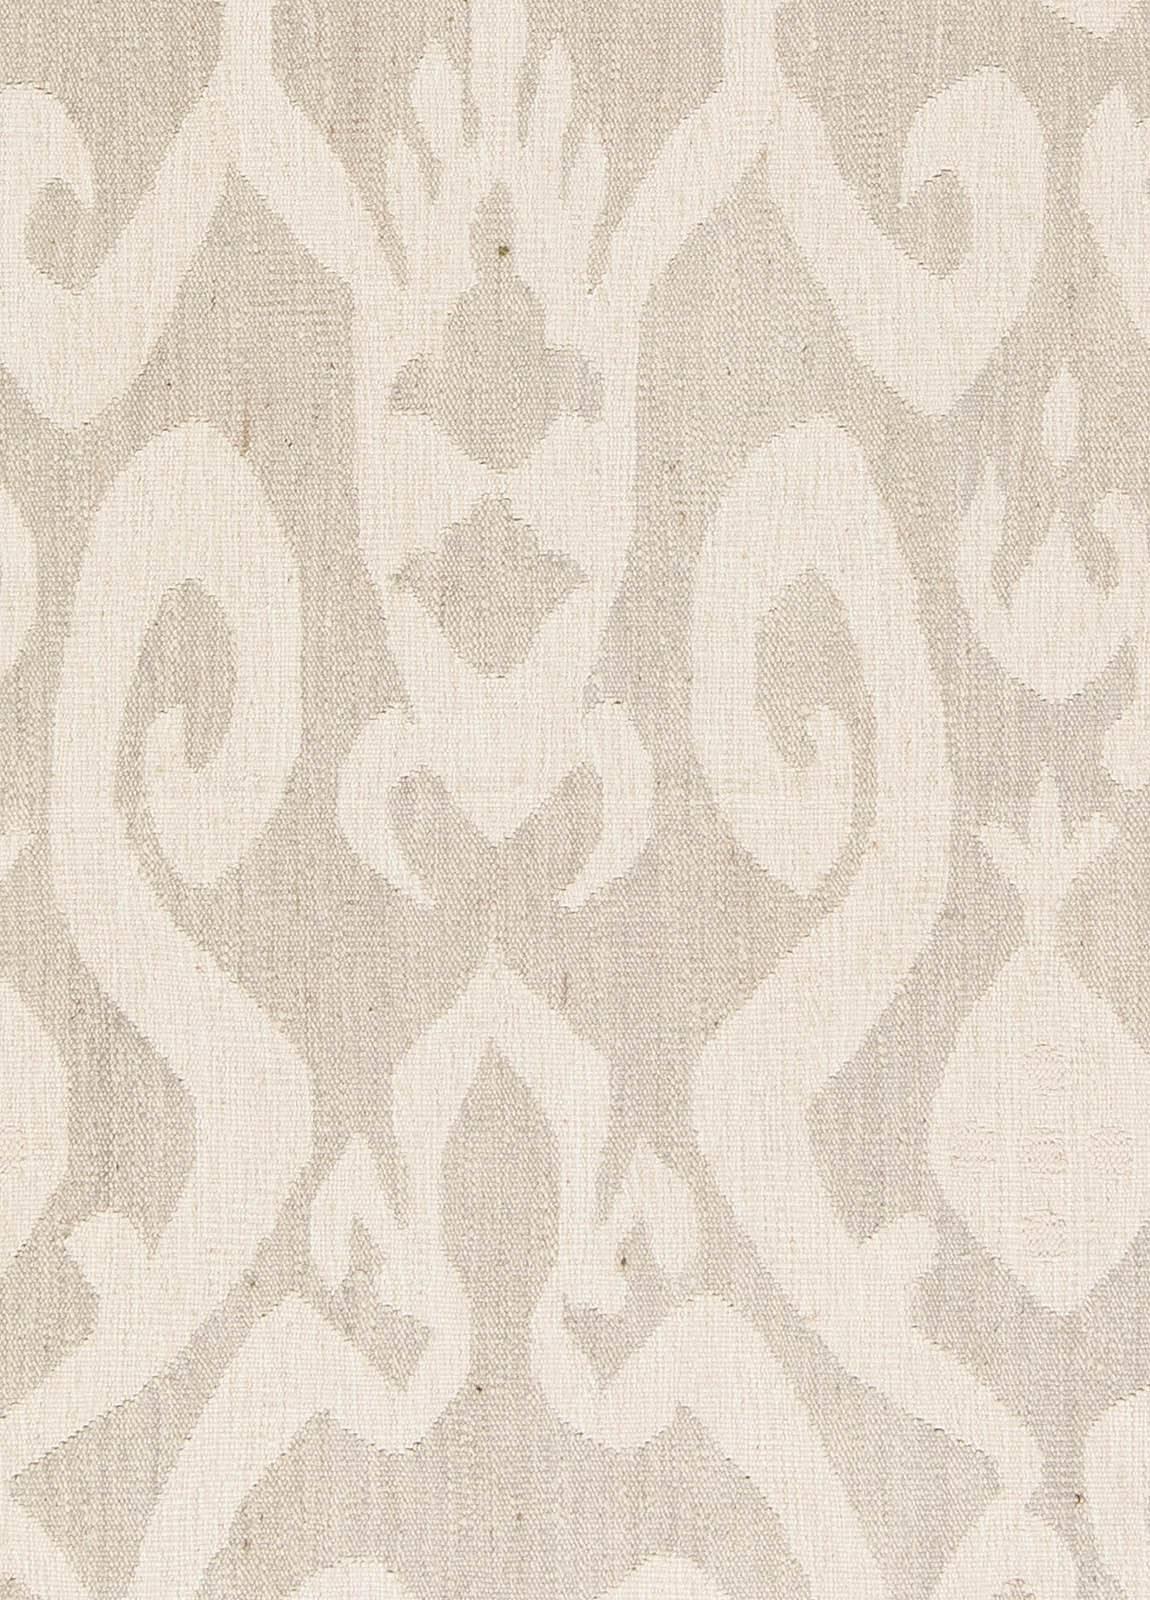 Contemporary light grey handmade wool kilim rug by Doris Leslie Blau.
Size: 9.10